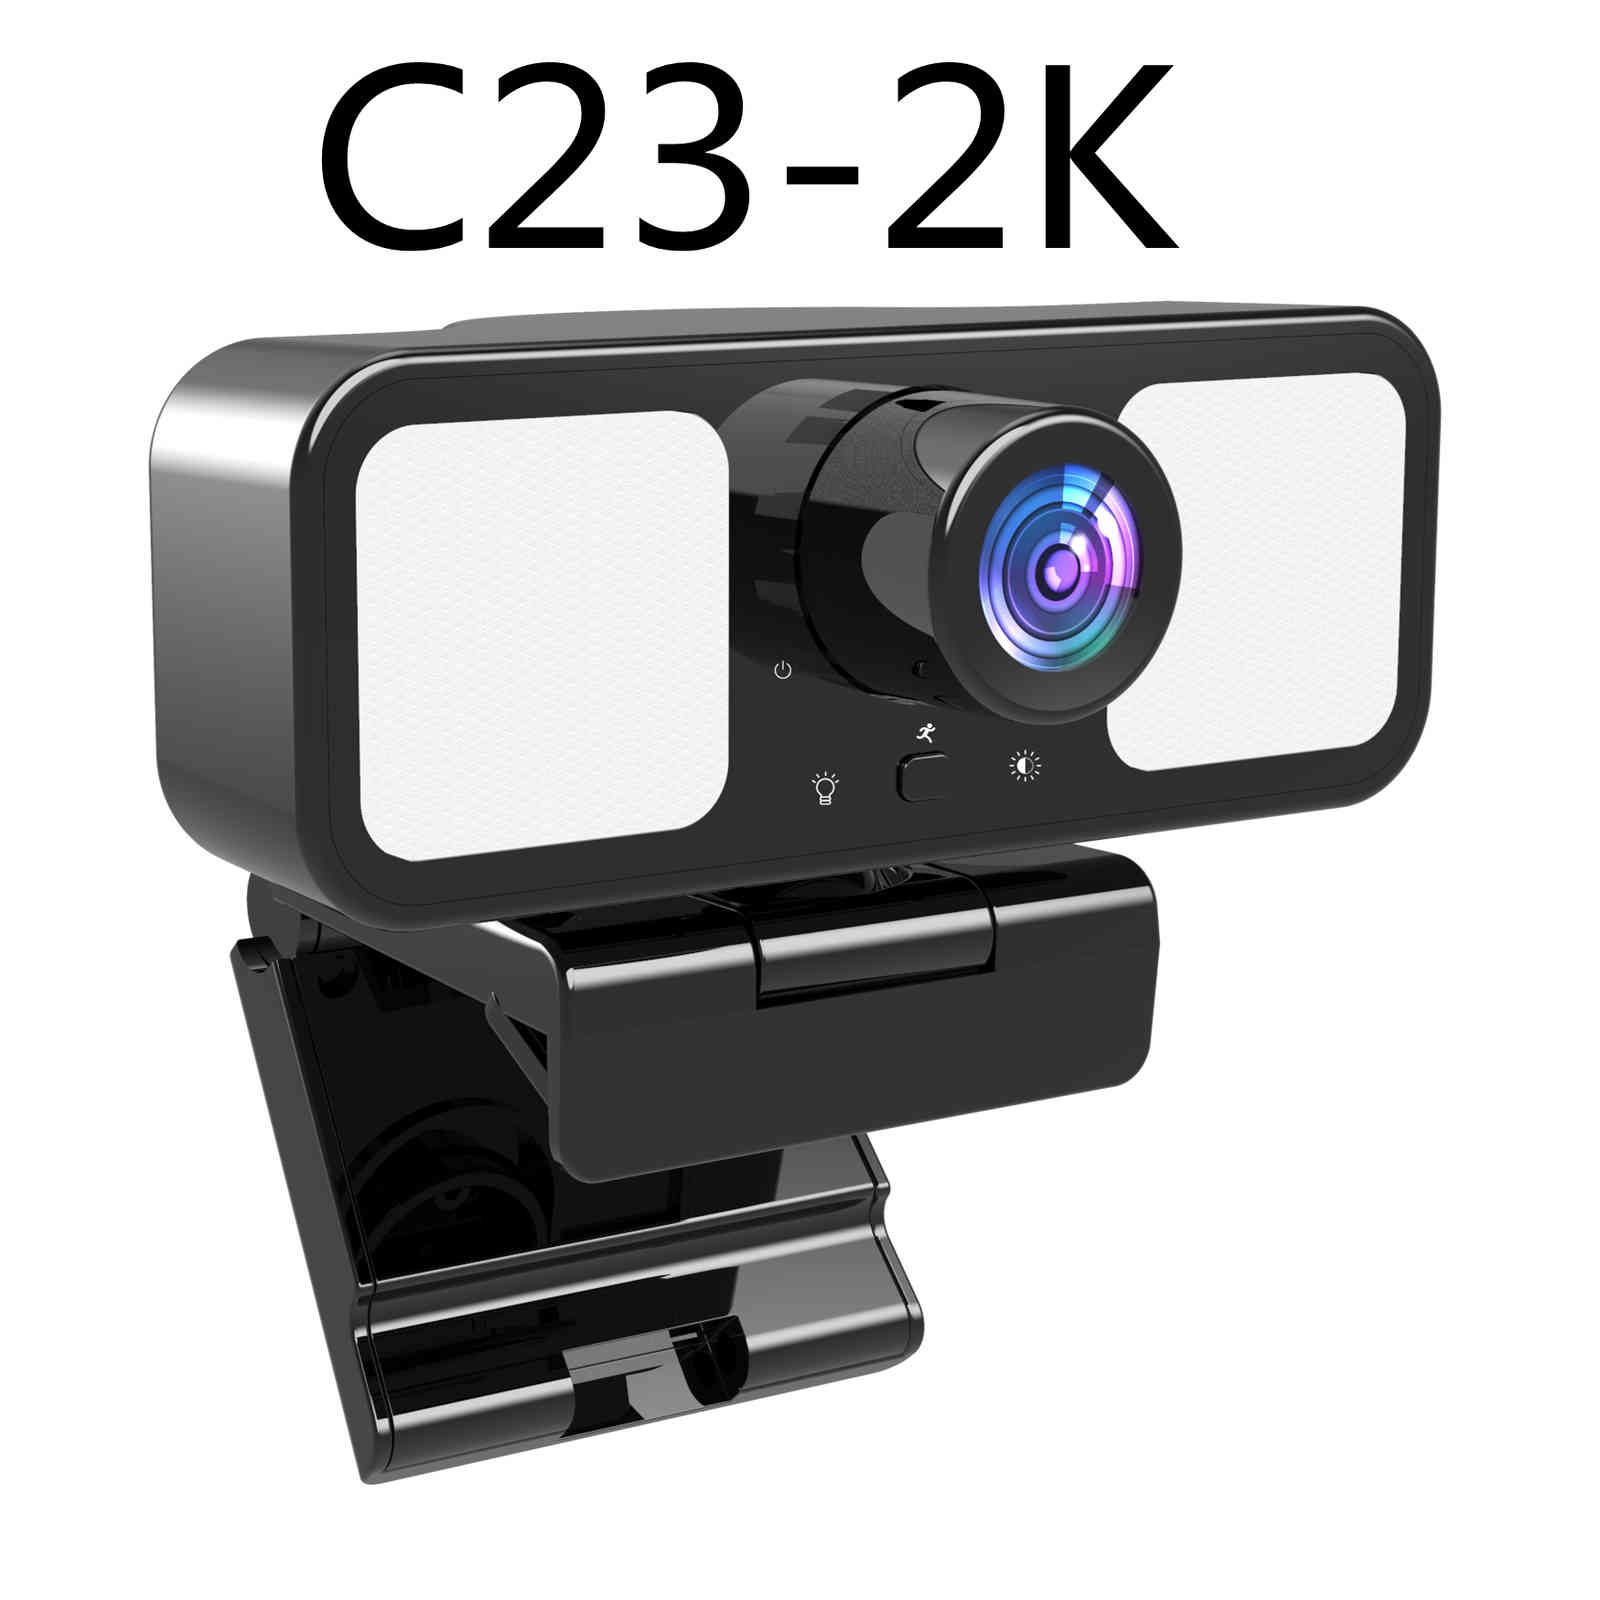 C23-2K